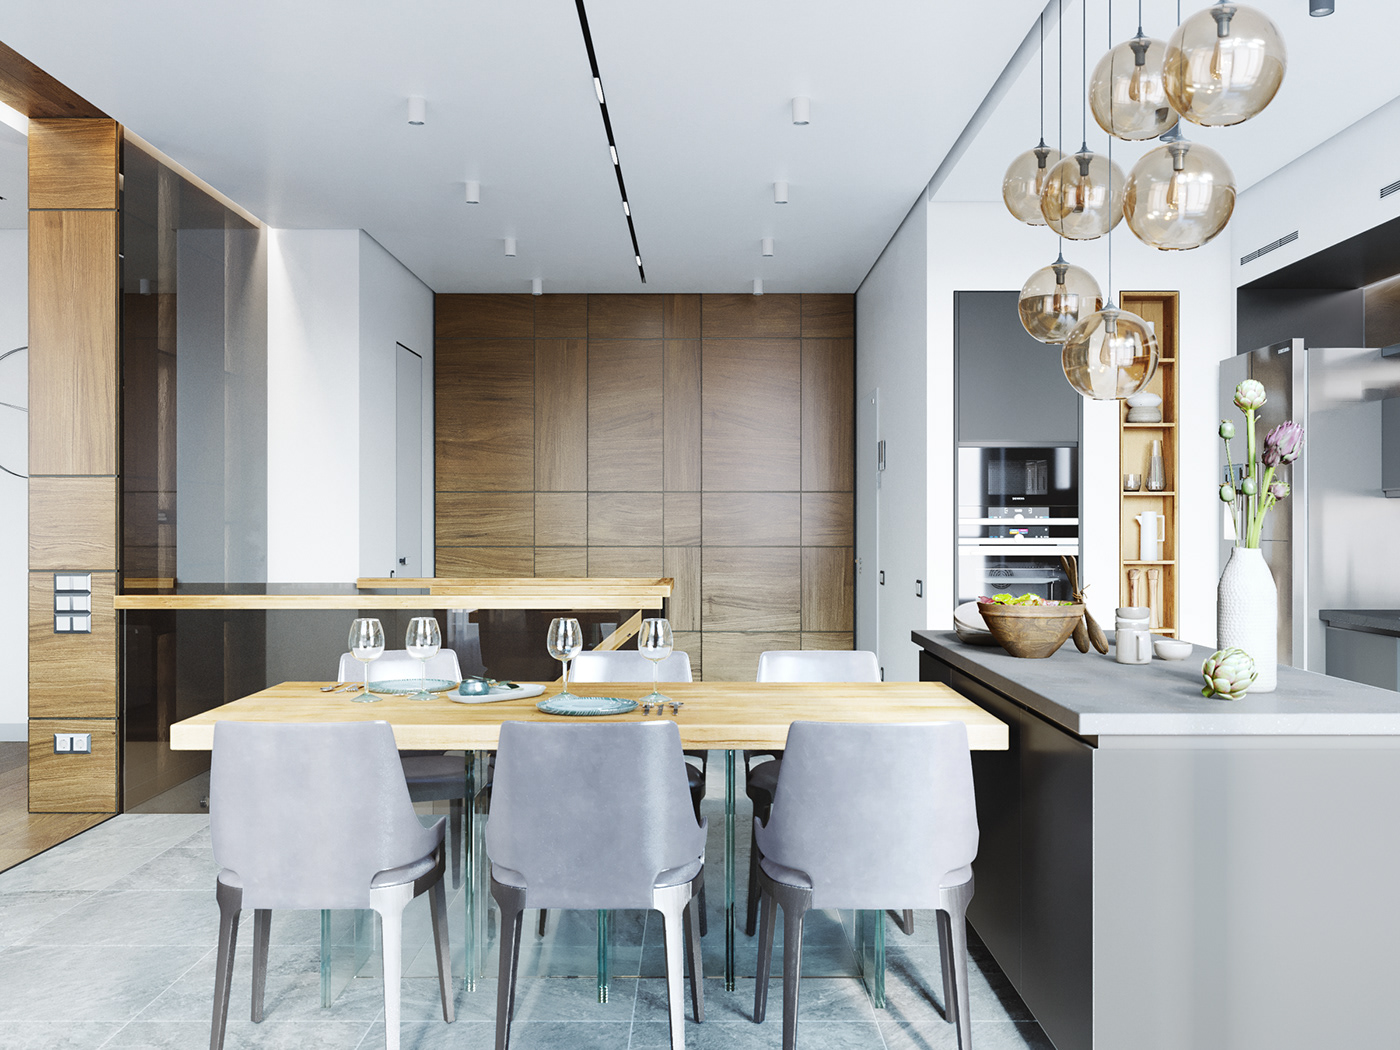 design Interior apartment duplex kitchen livingroom bedroom mirage potocco